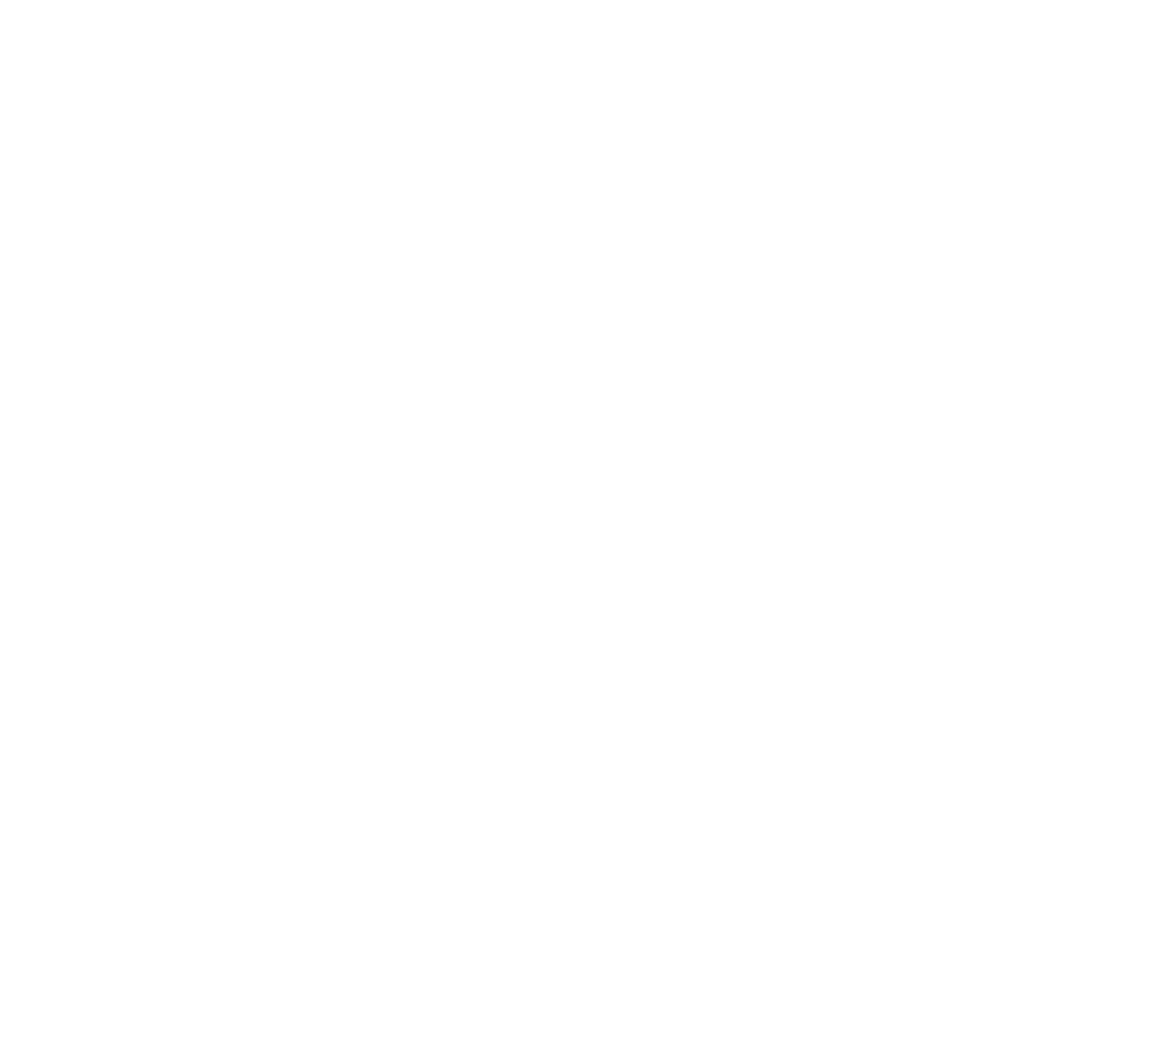 971 MMA & Fitness Academy LOGO for Best MMA gym in Dubai